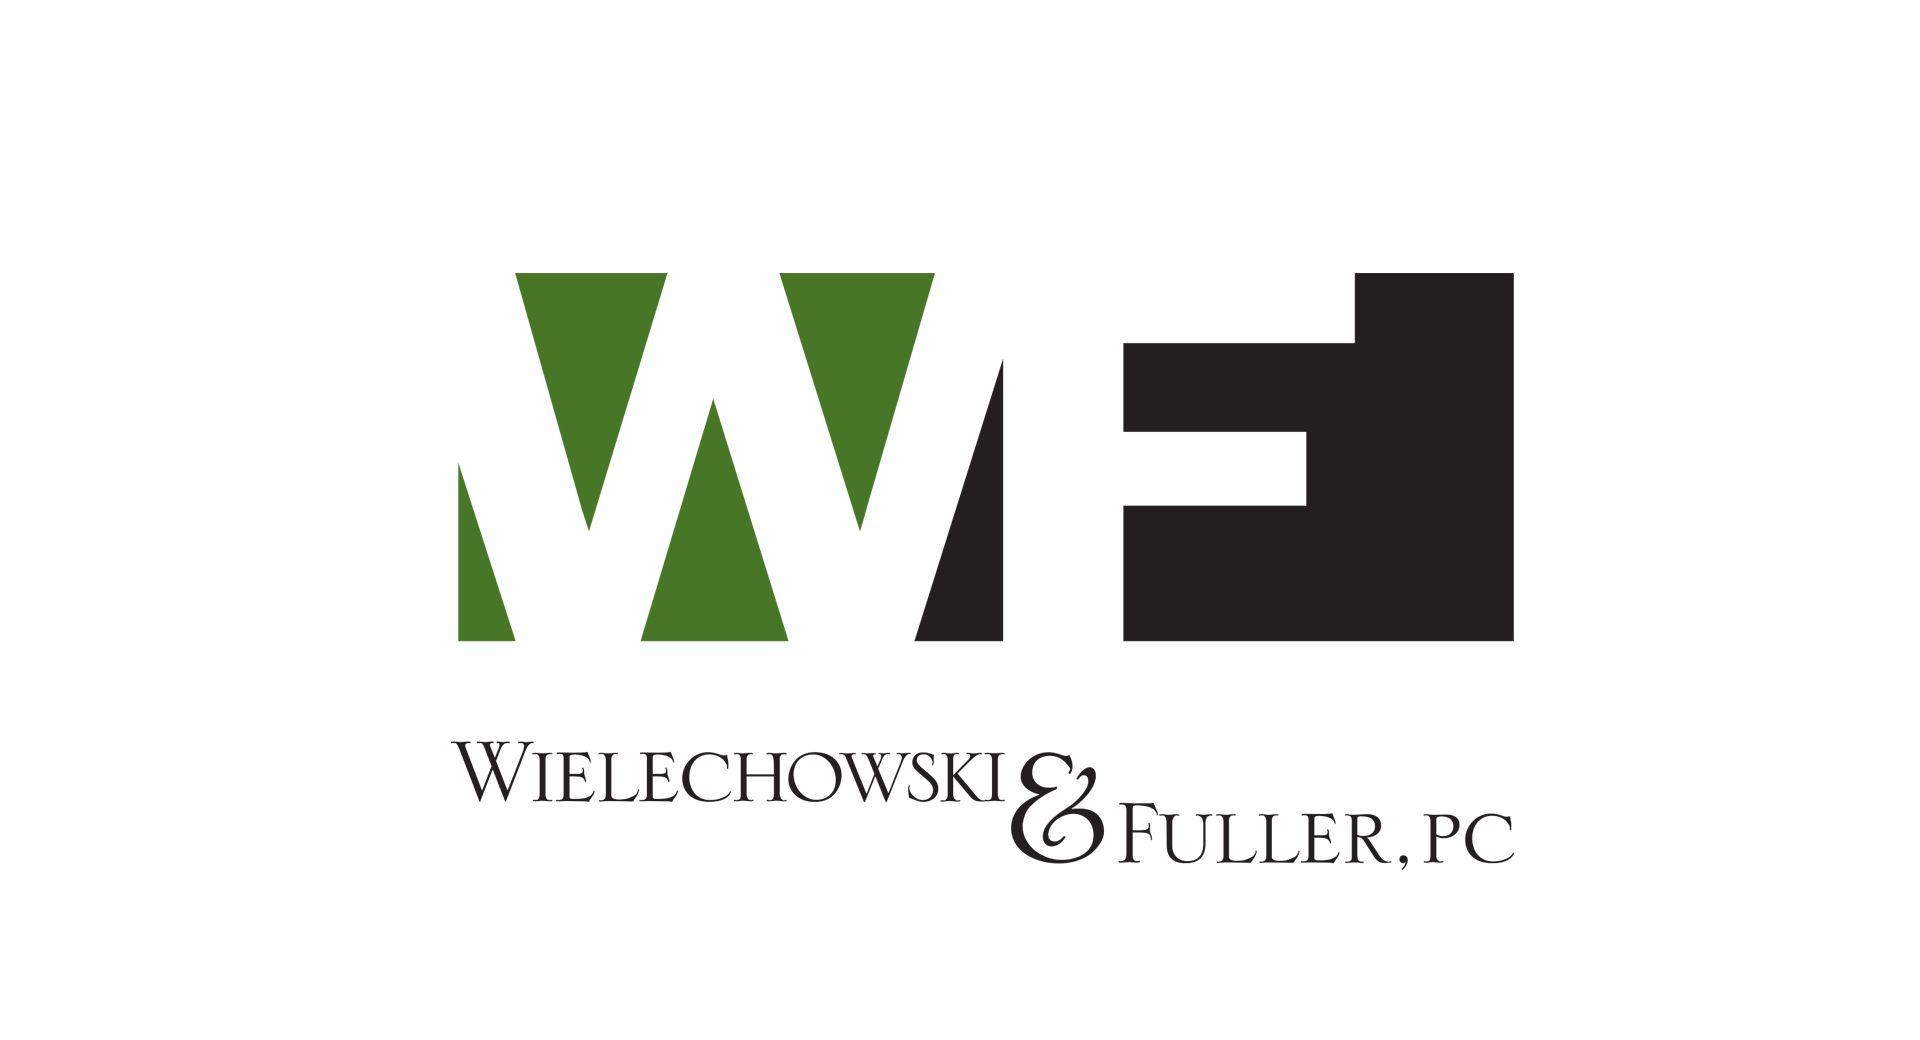 Fuller Logo - Wielechowski & Fuller Law Firm - Logo Design by CCP Web Design